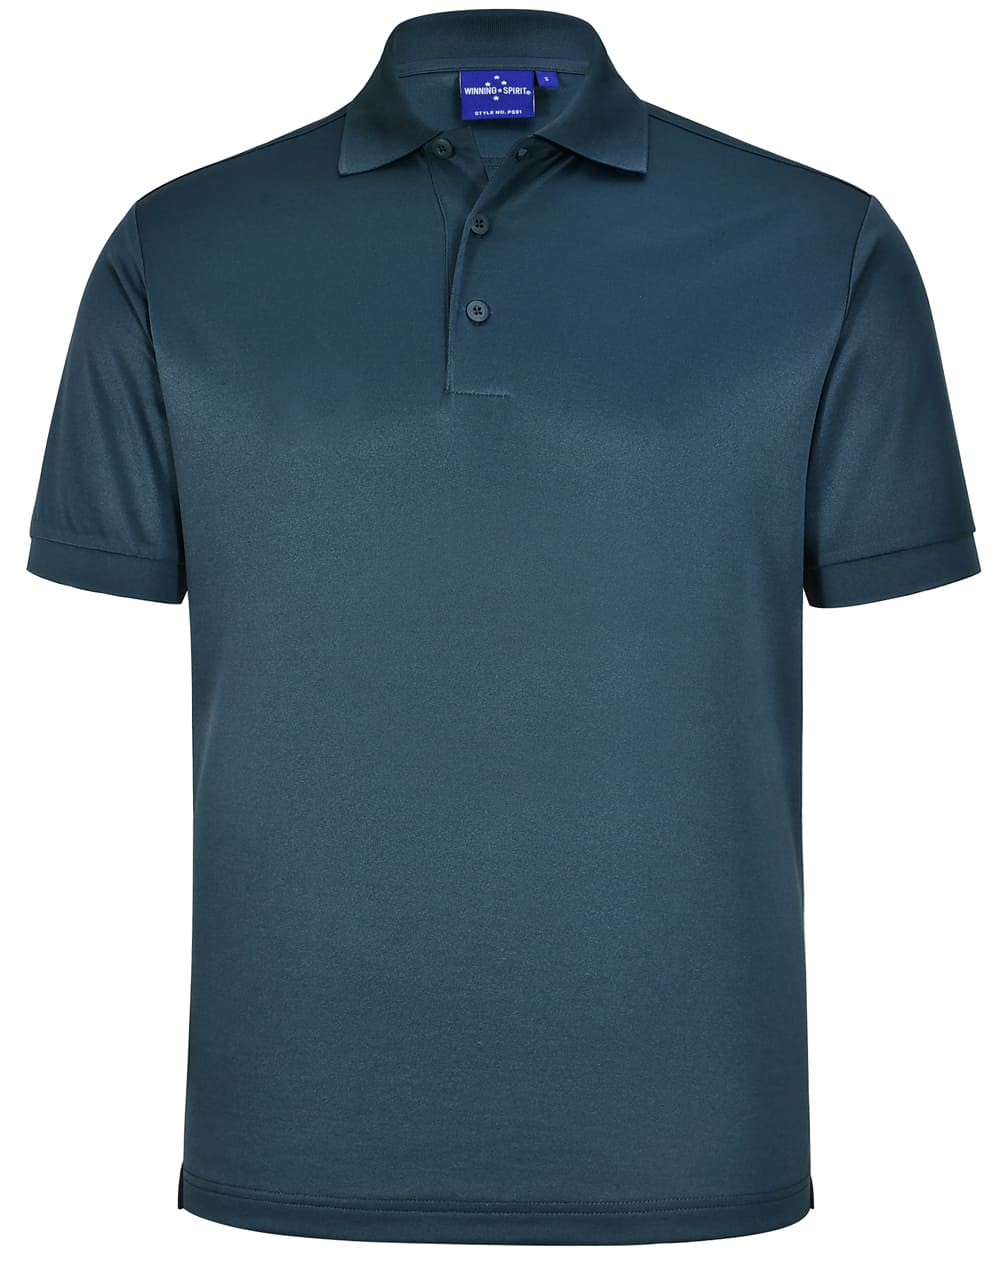 Custom Mens (Navy) Corporate Branded Polo Shirts Online Perth Australia